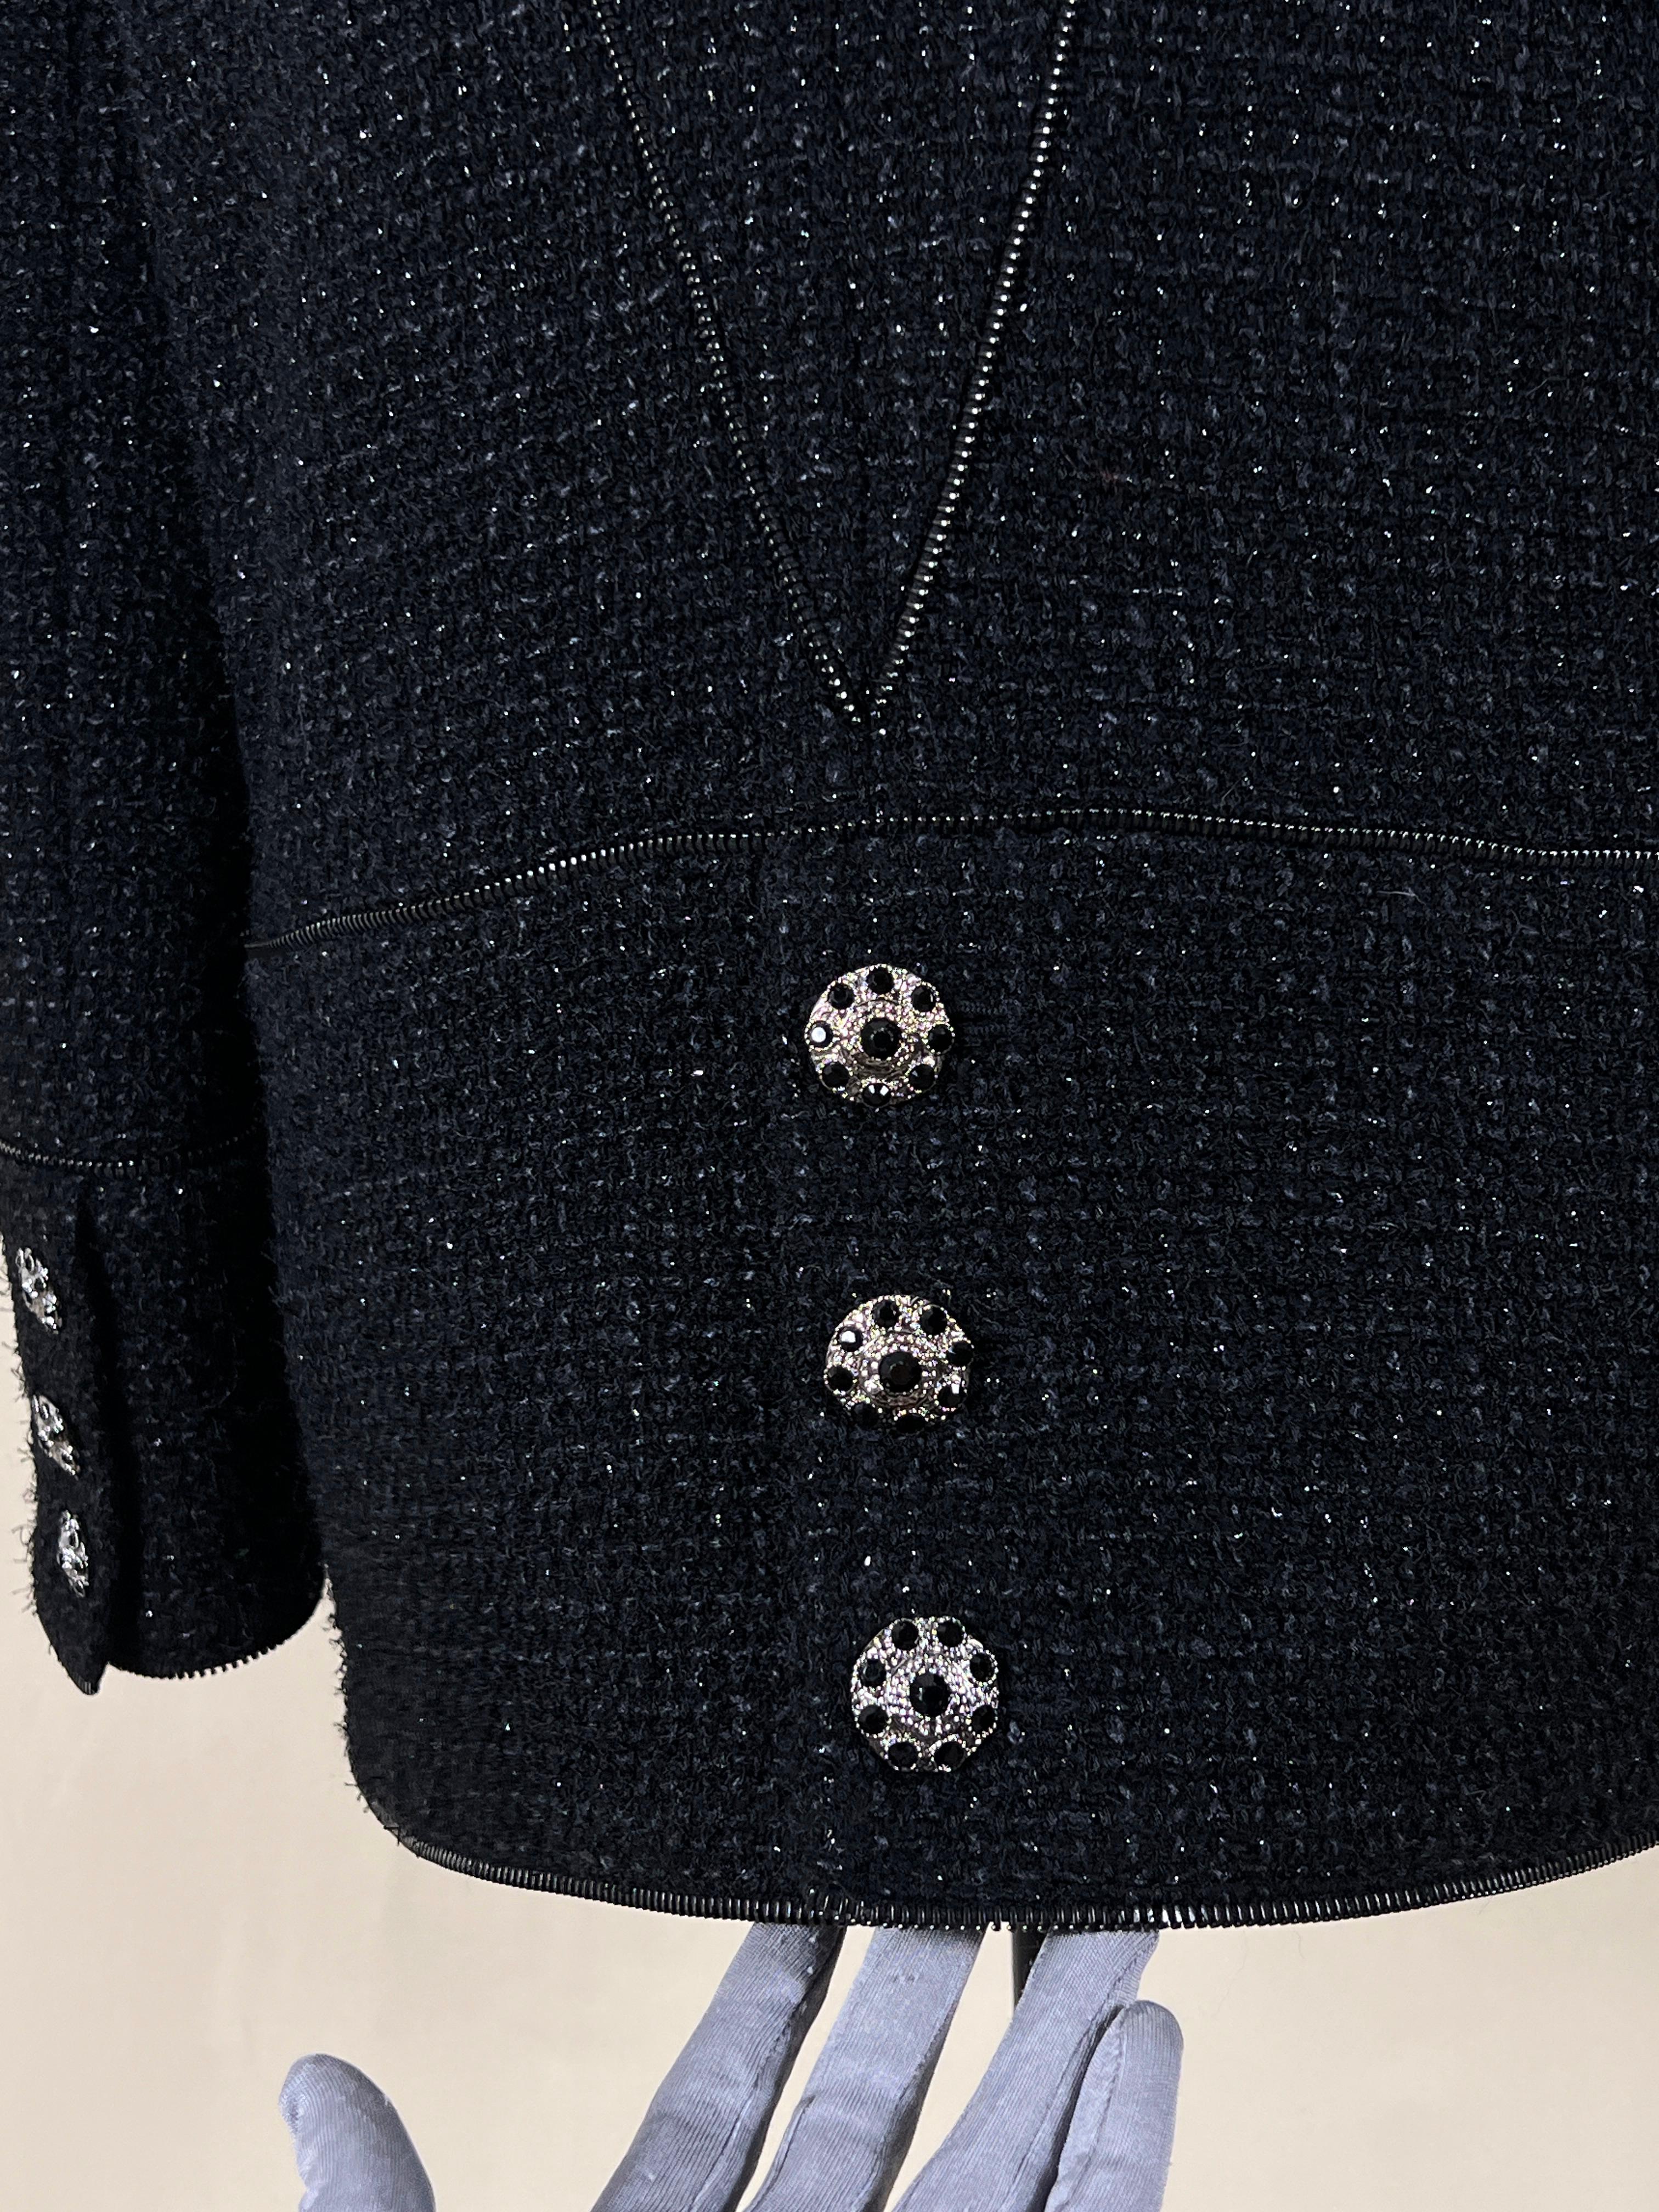 Chanel CC Jewel Gripoix Buttons Black Tweed Jacket 10